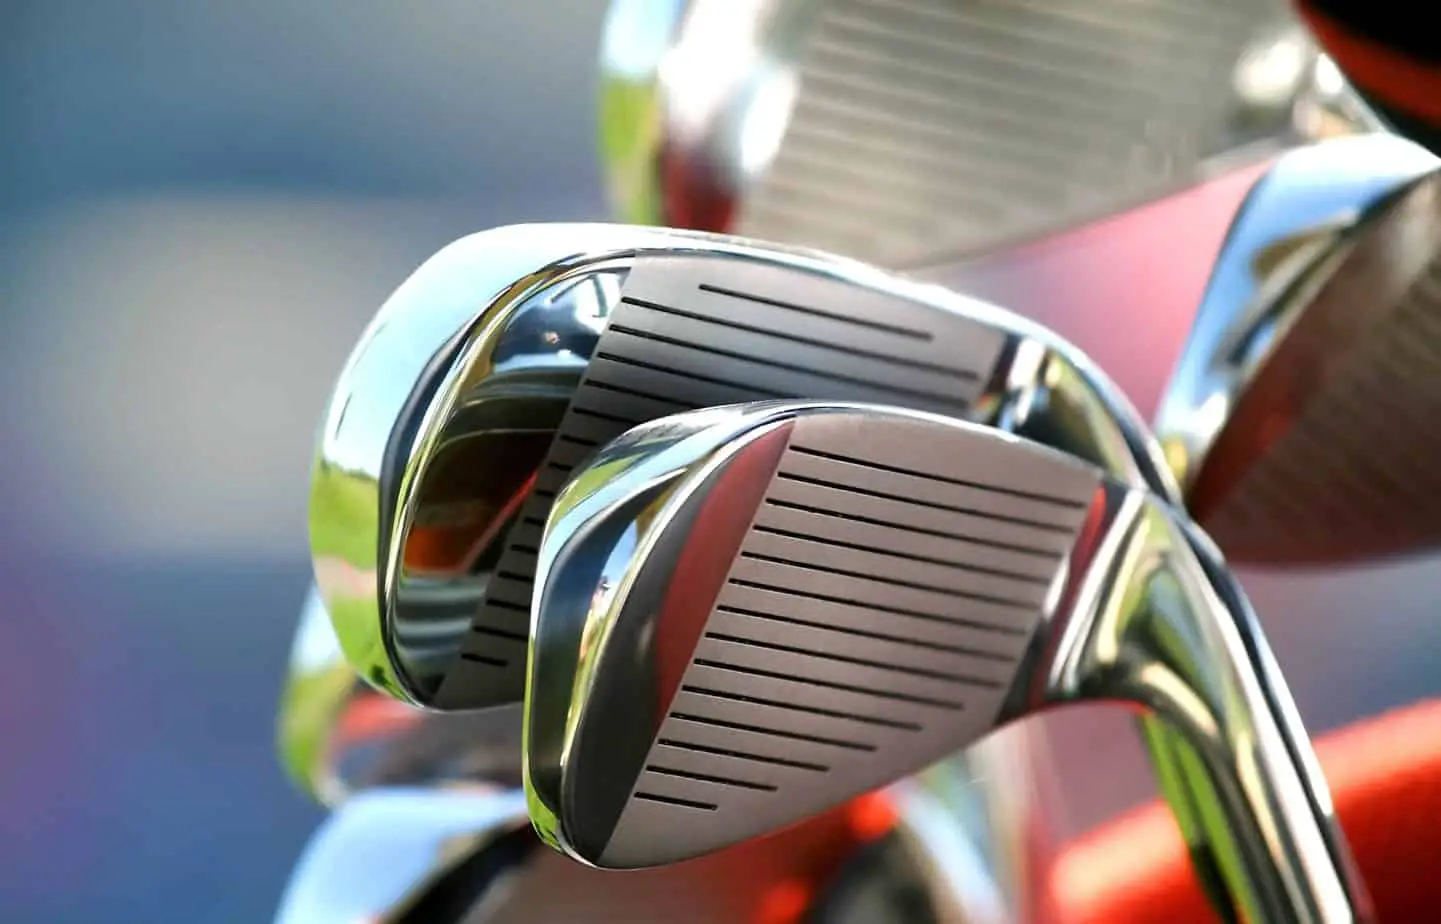 how to polish golf clubs